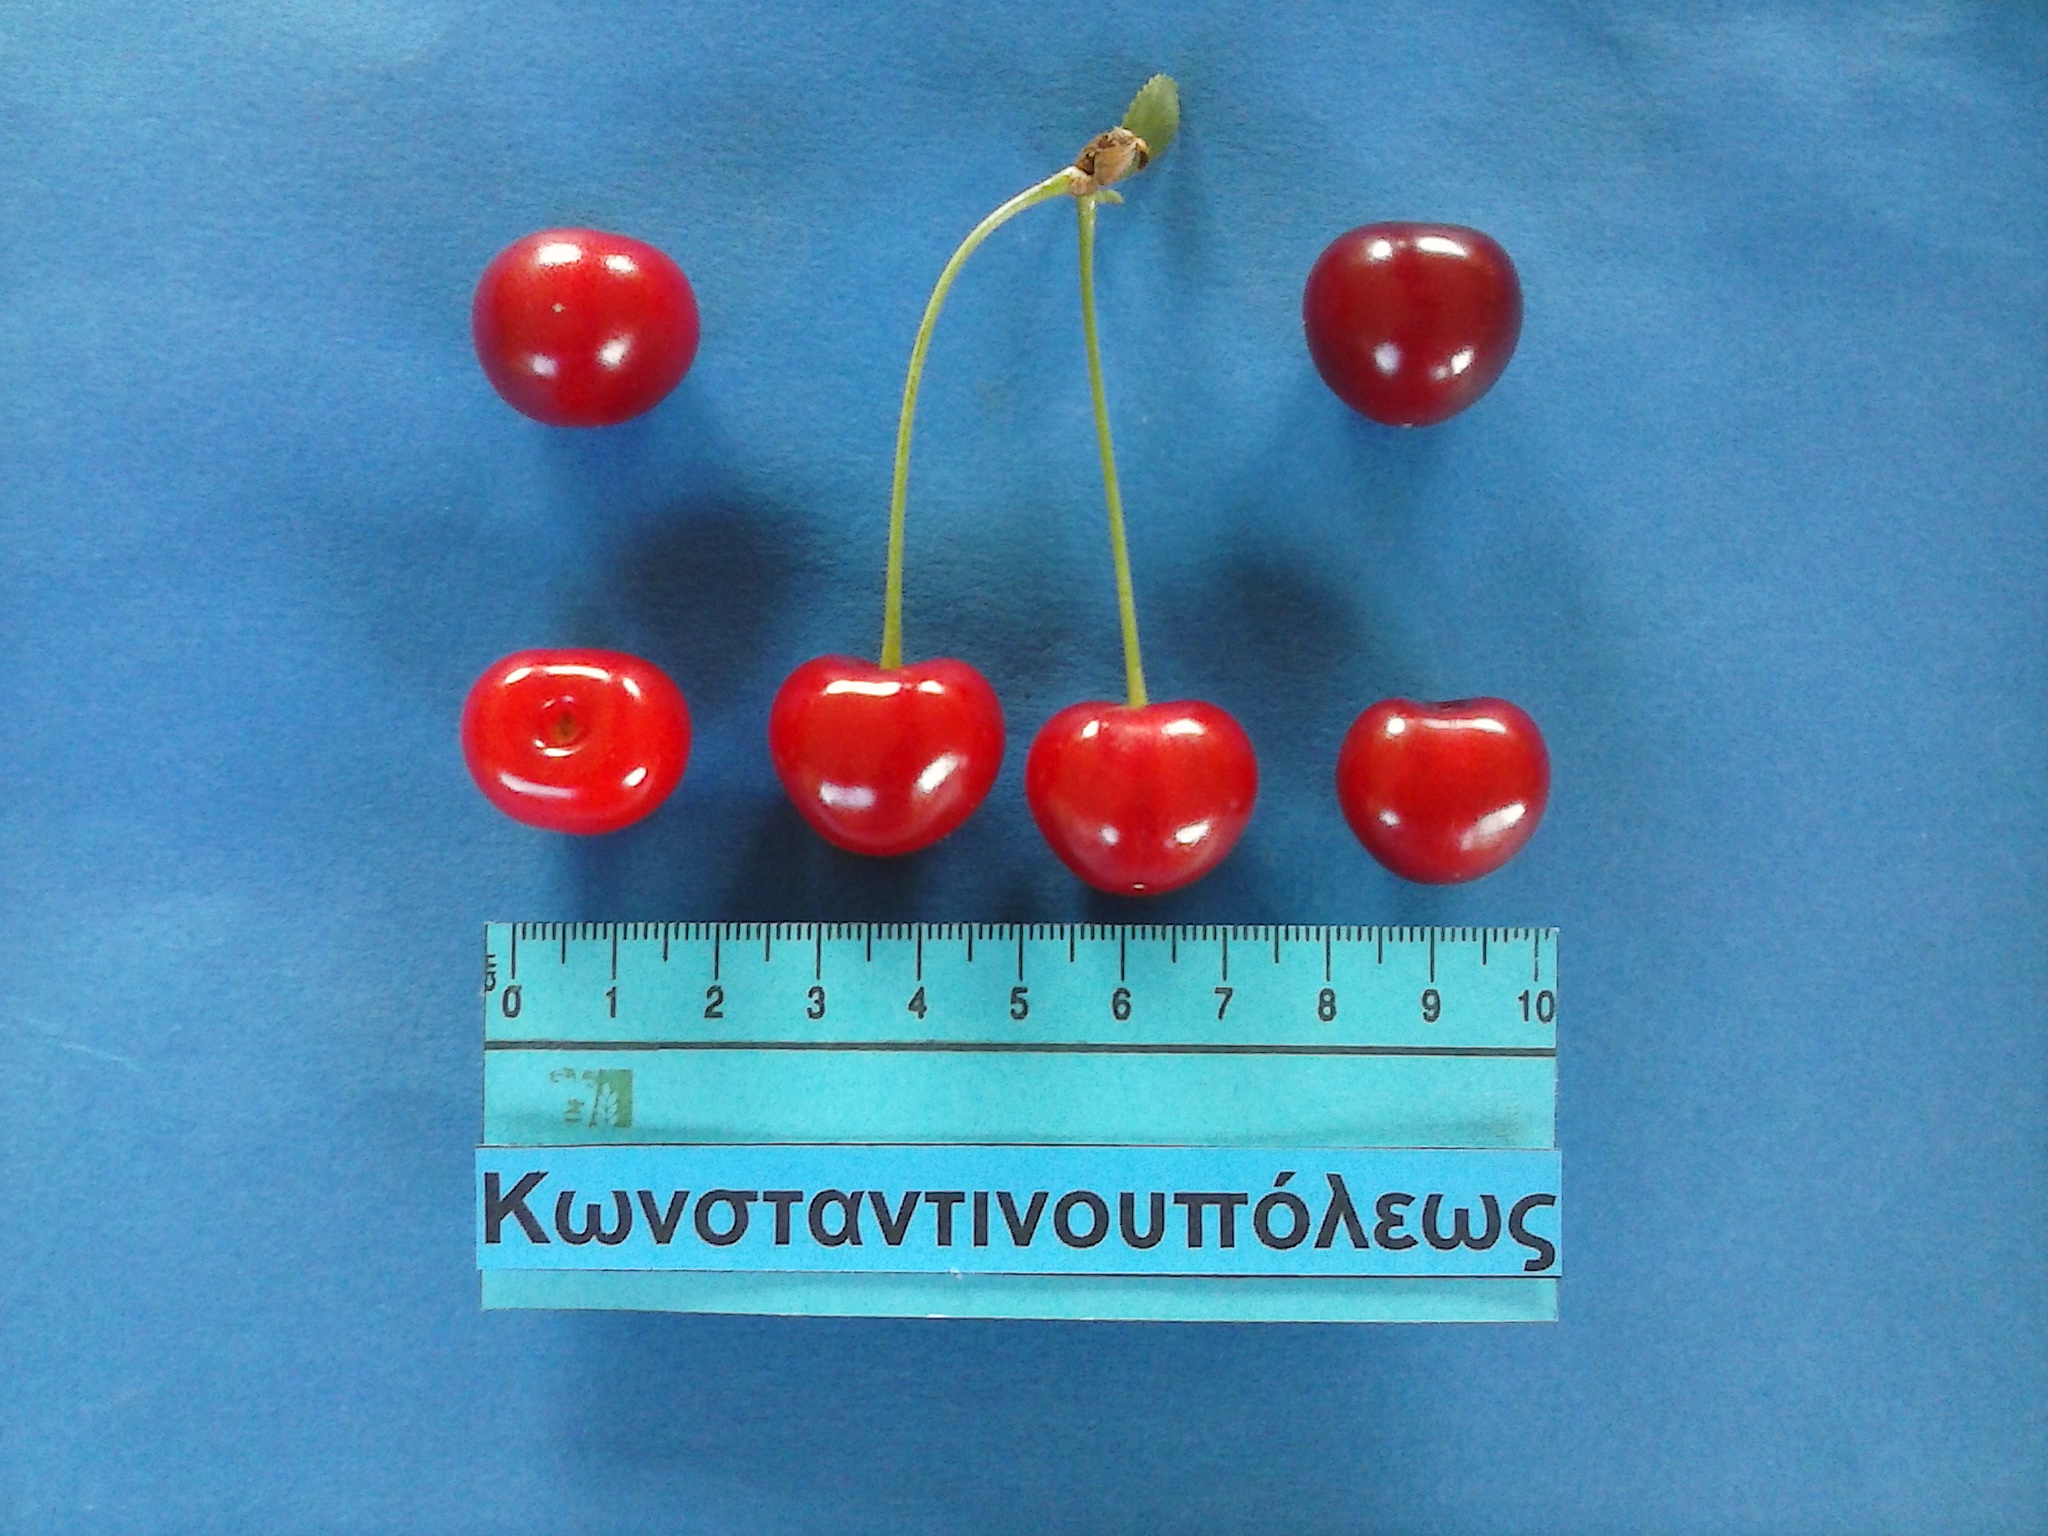 Sour cherry varieties of Greek origin